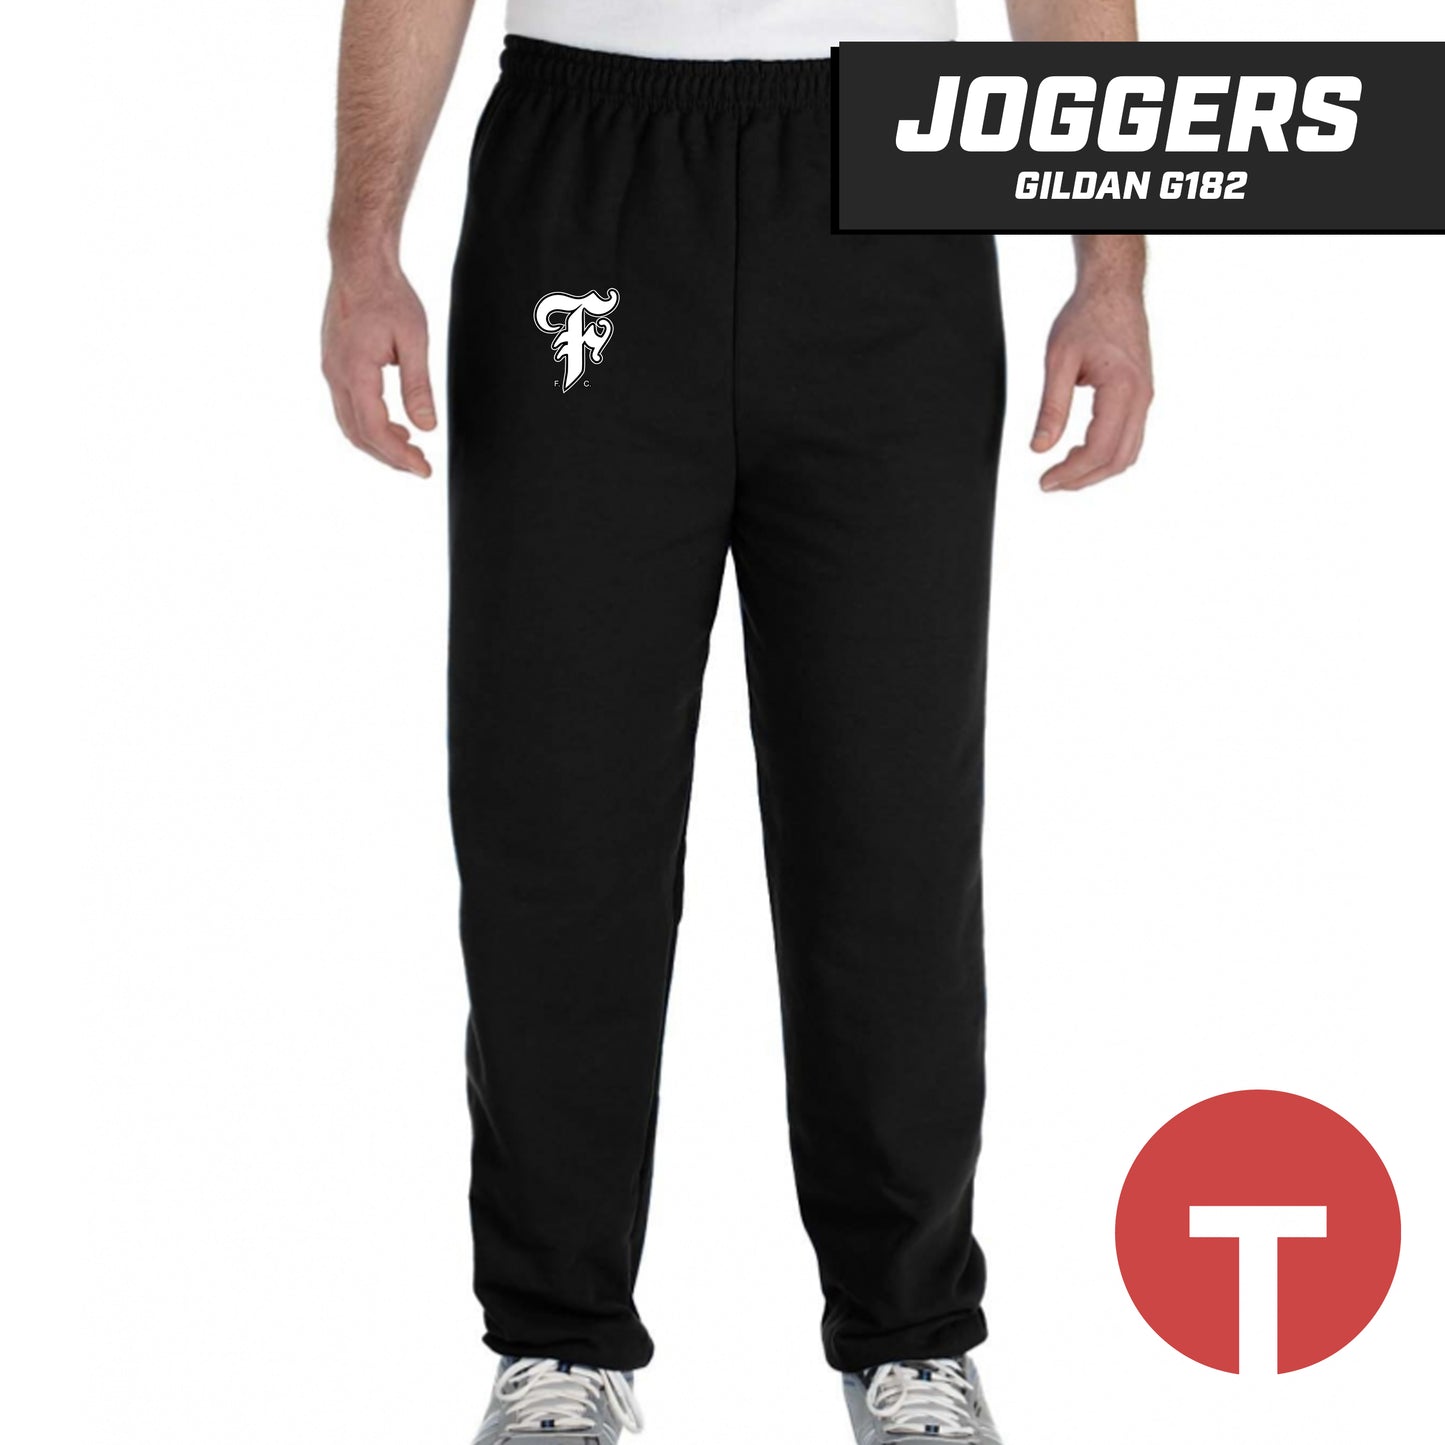 Forney FC - Jogger pants Gildan G182